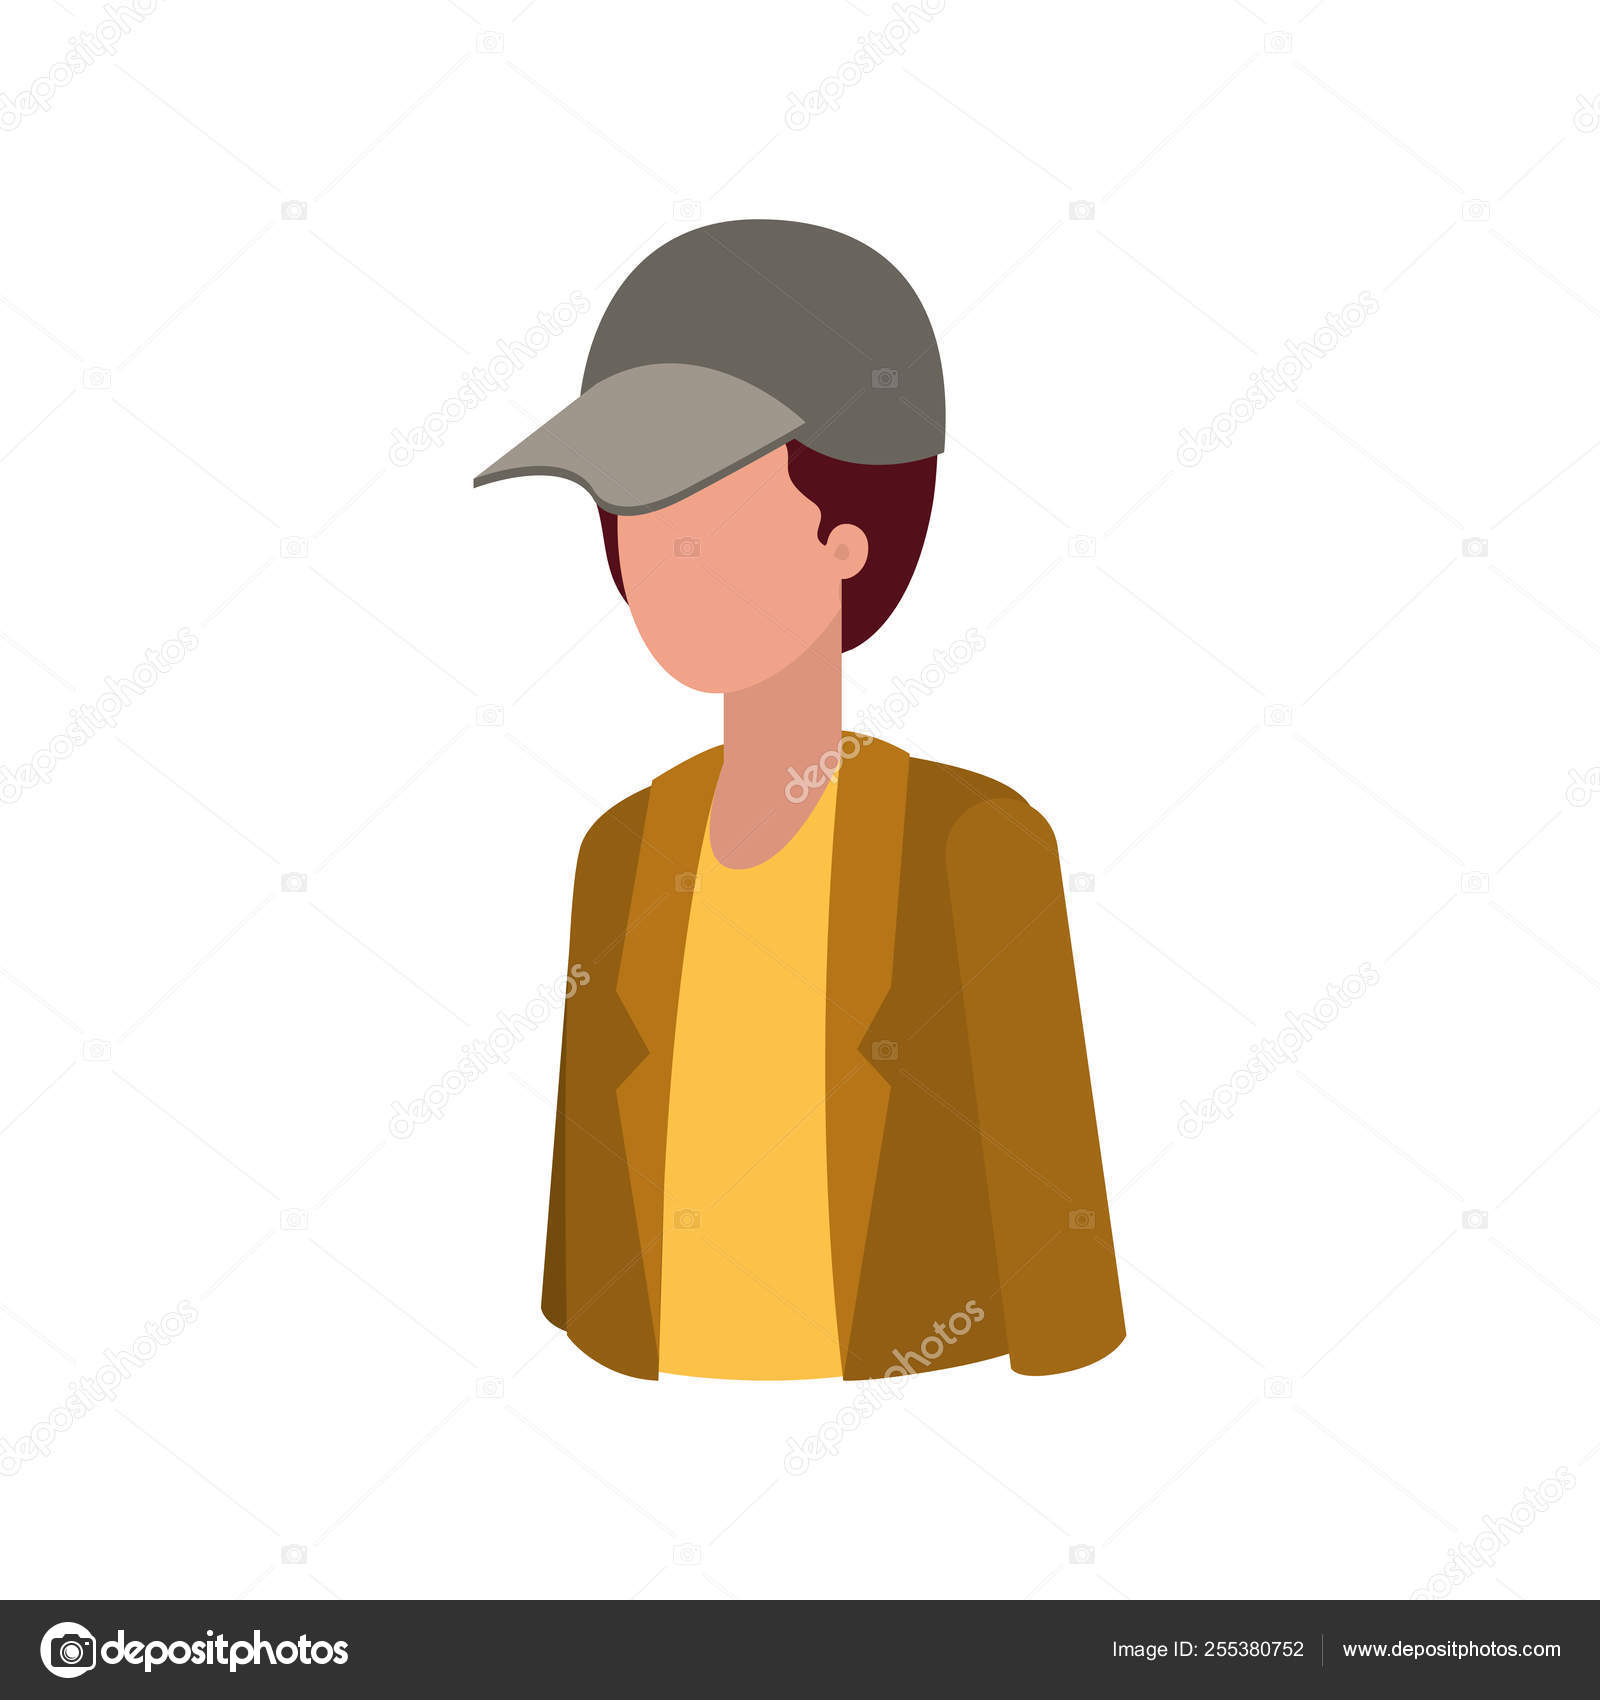 Anime male avatars stock vector. Illustration of character - 255502374